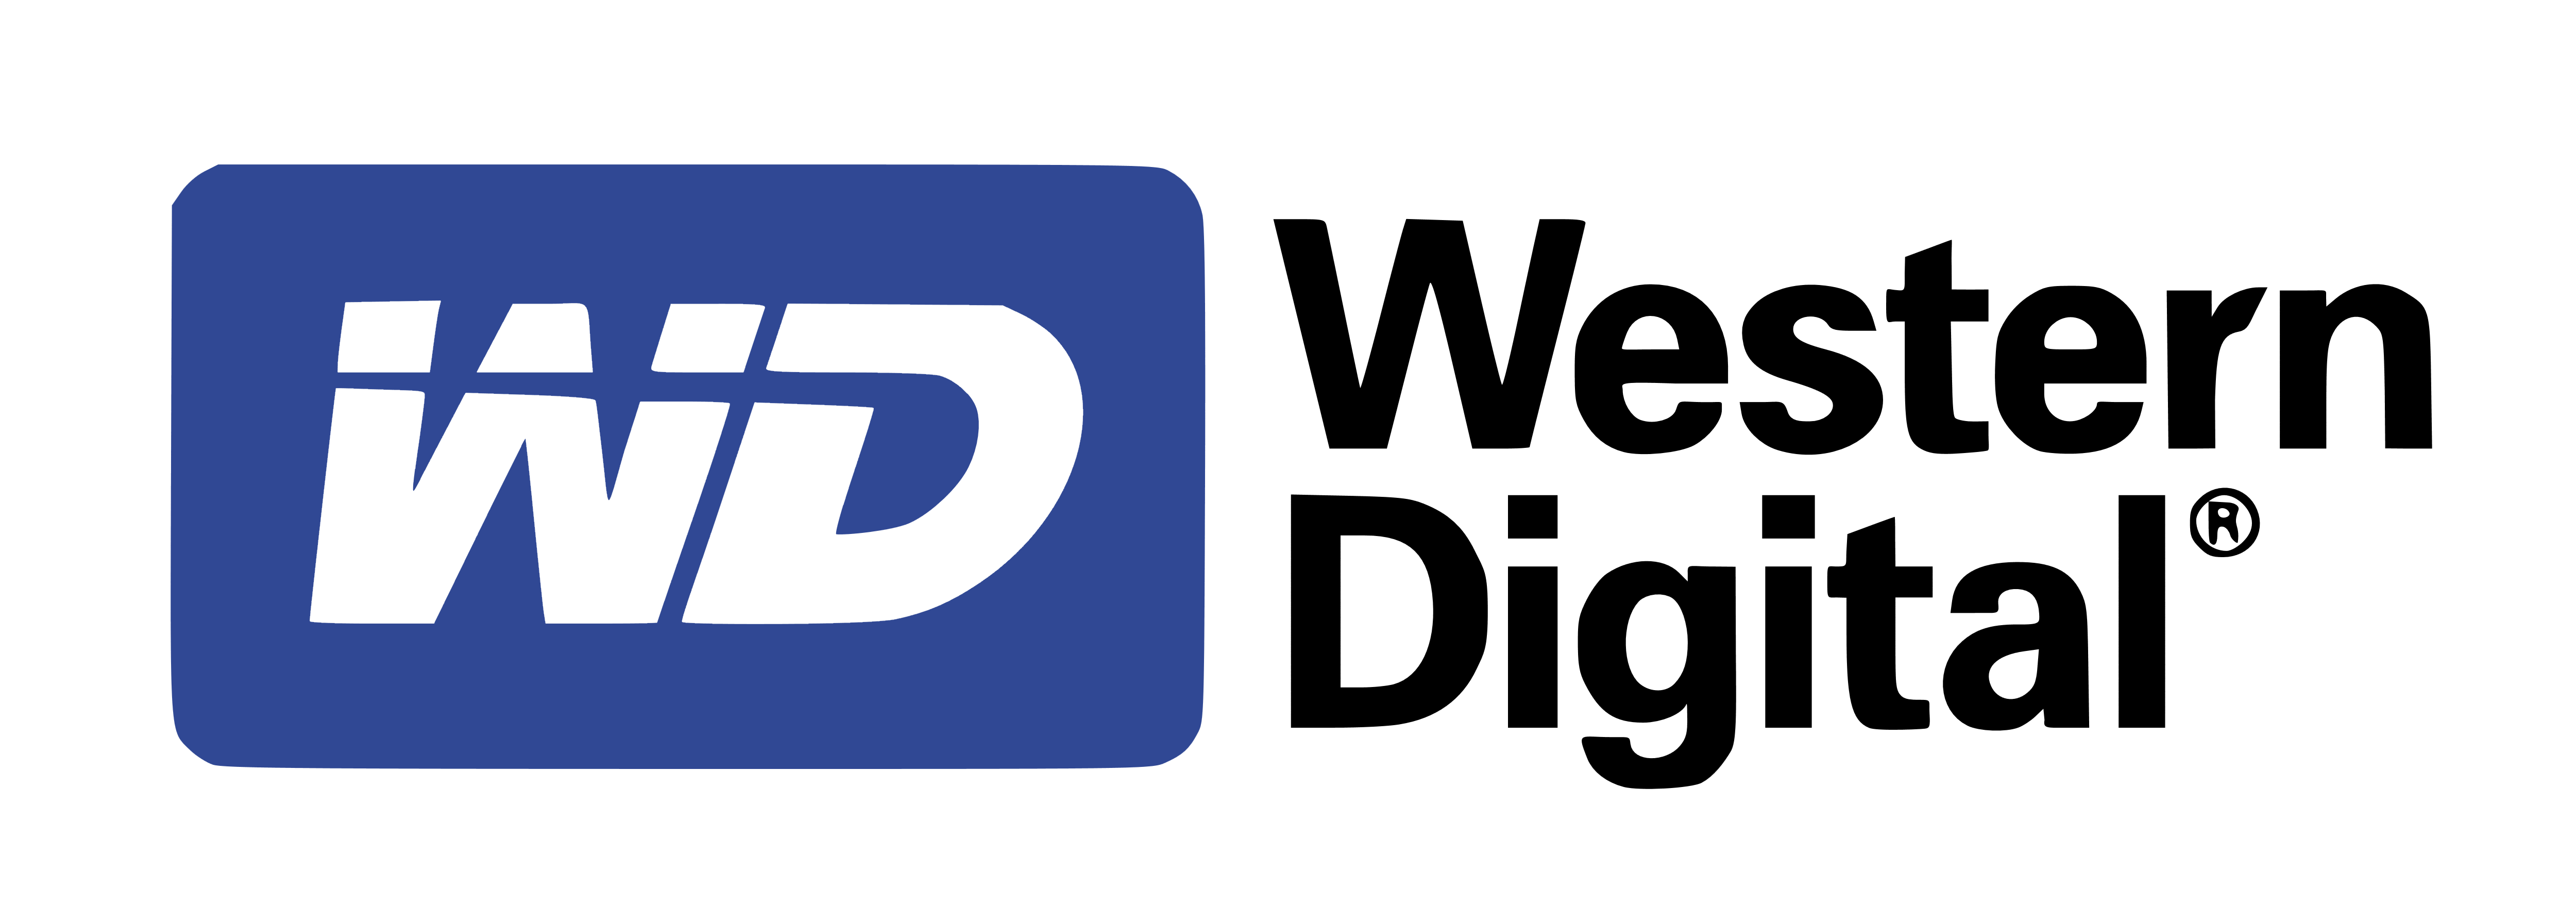 Wester Digital (WD)